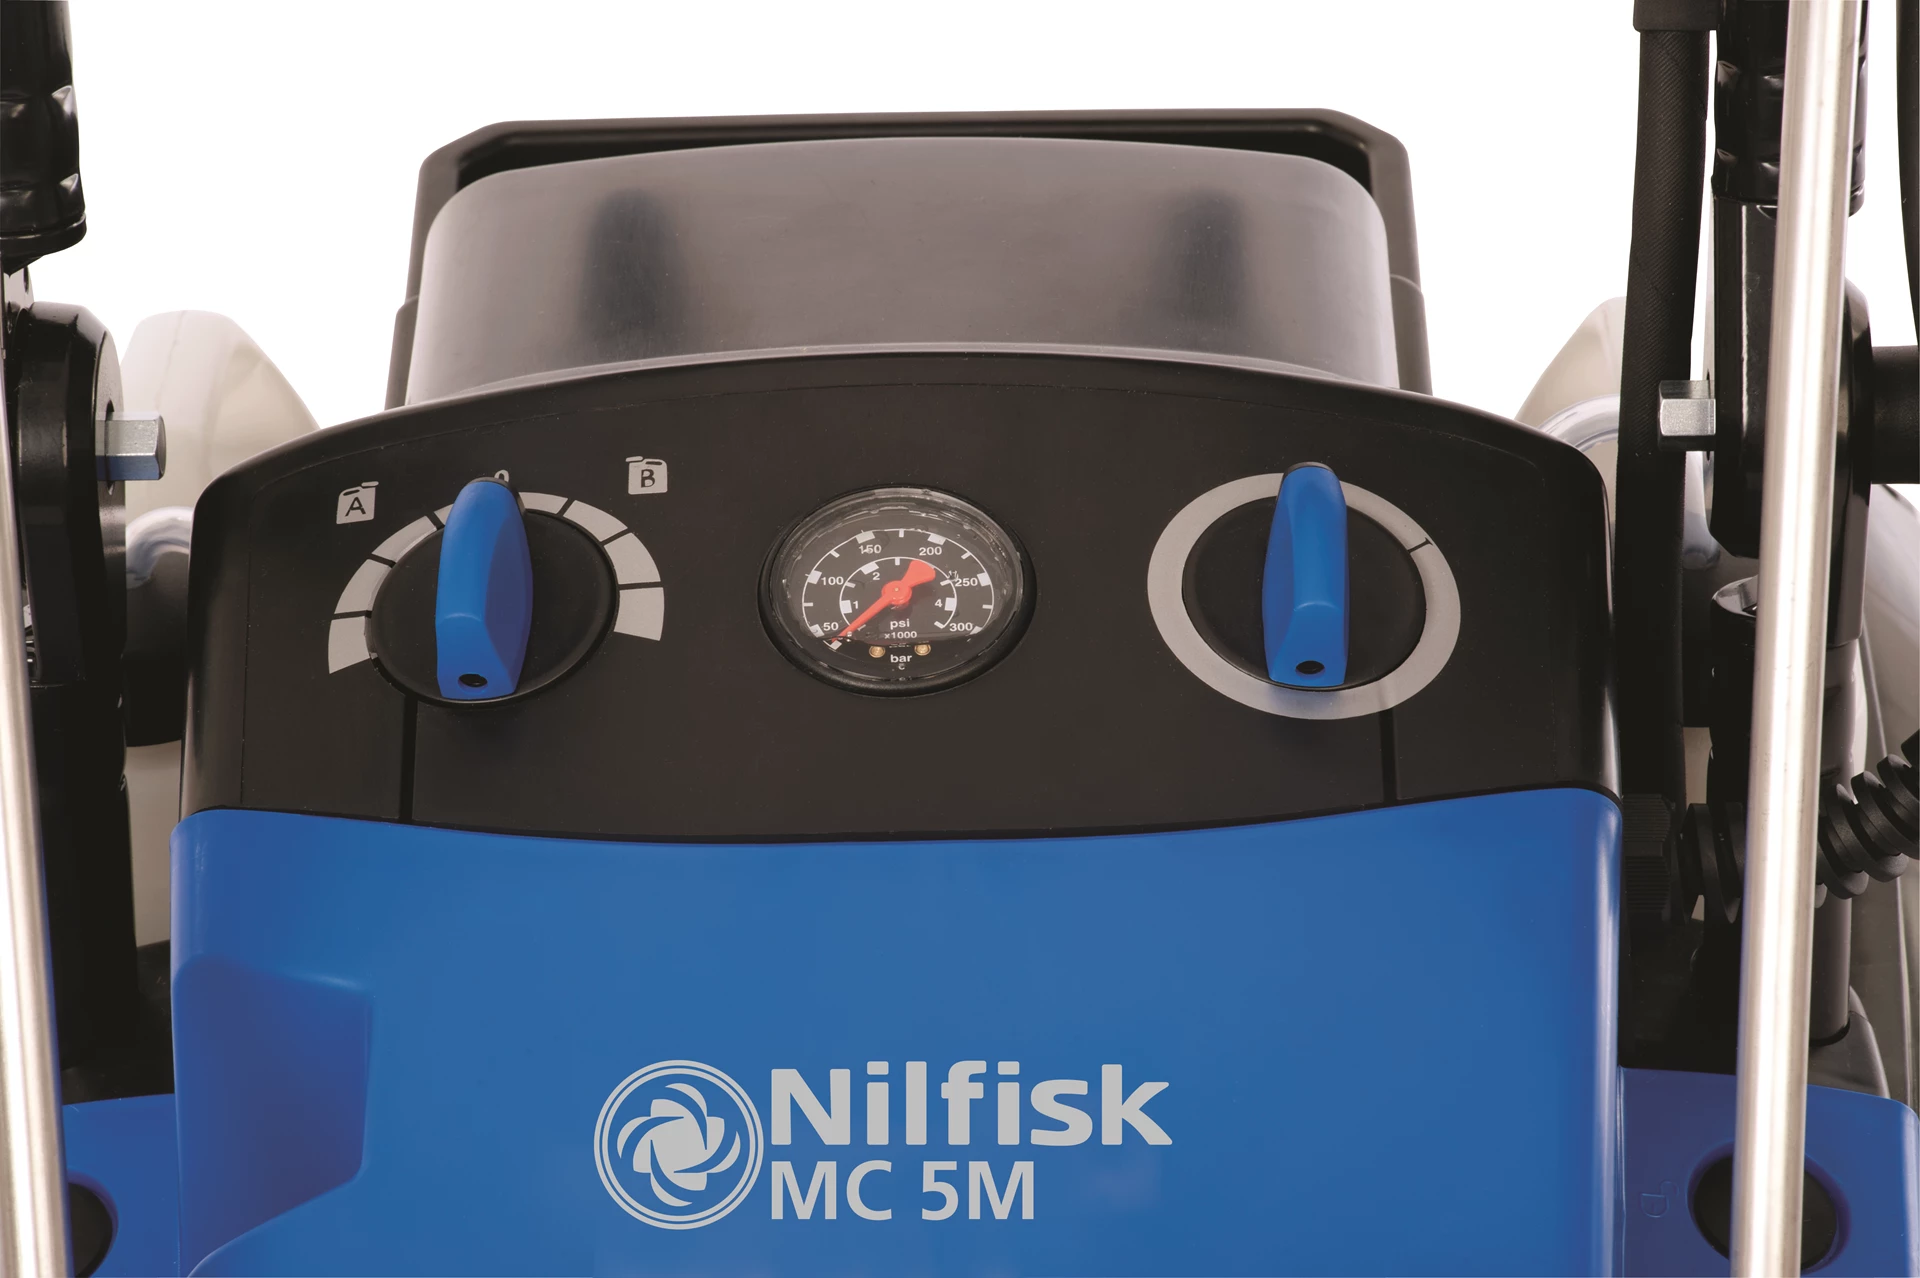 Hladnovodni visokotlačni čistilec Nilfisk MC 5M-220/1130 XT